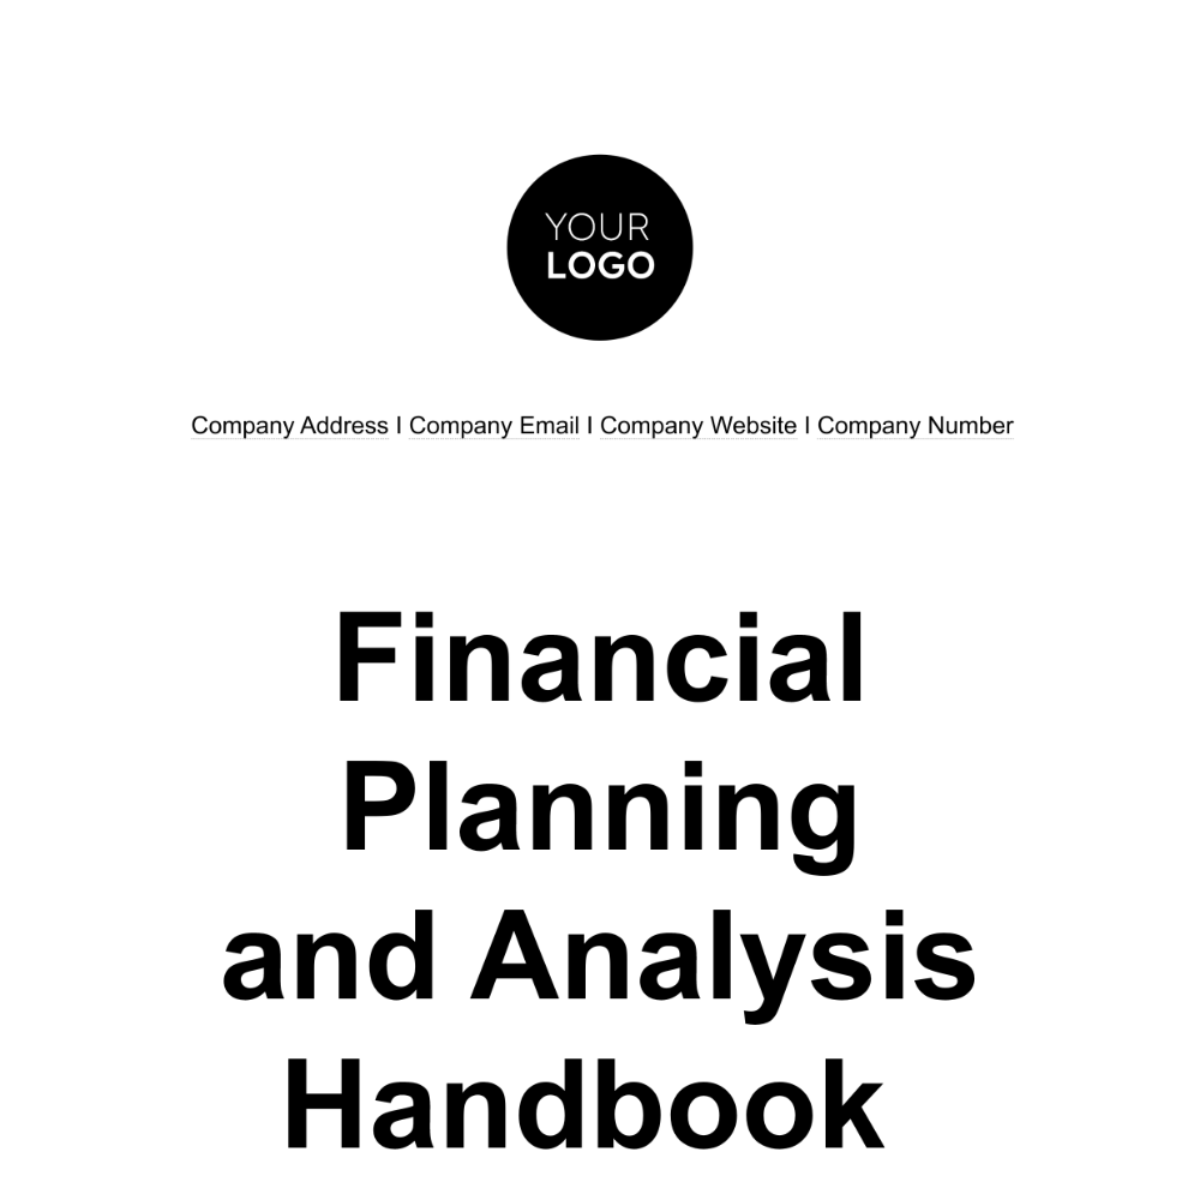 Financial Planning and Analysis Handbook Template